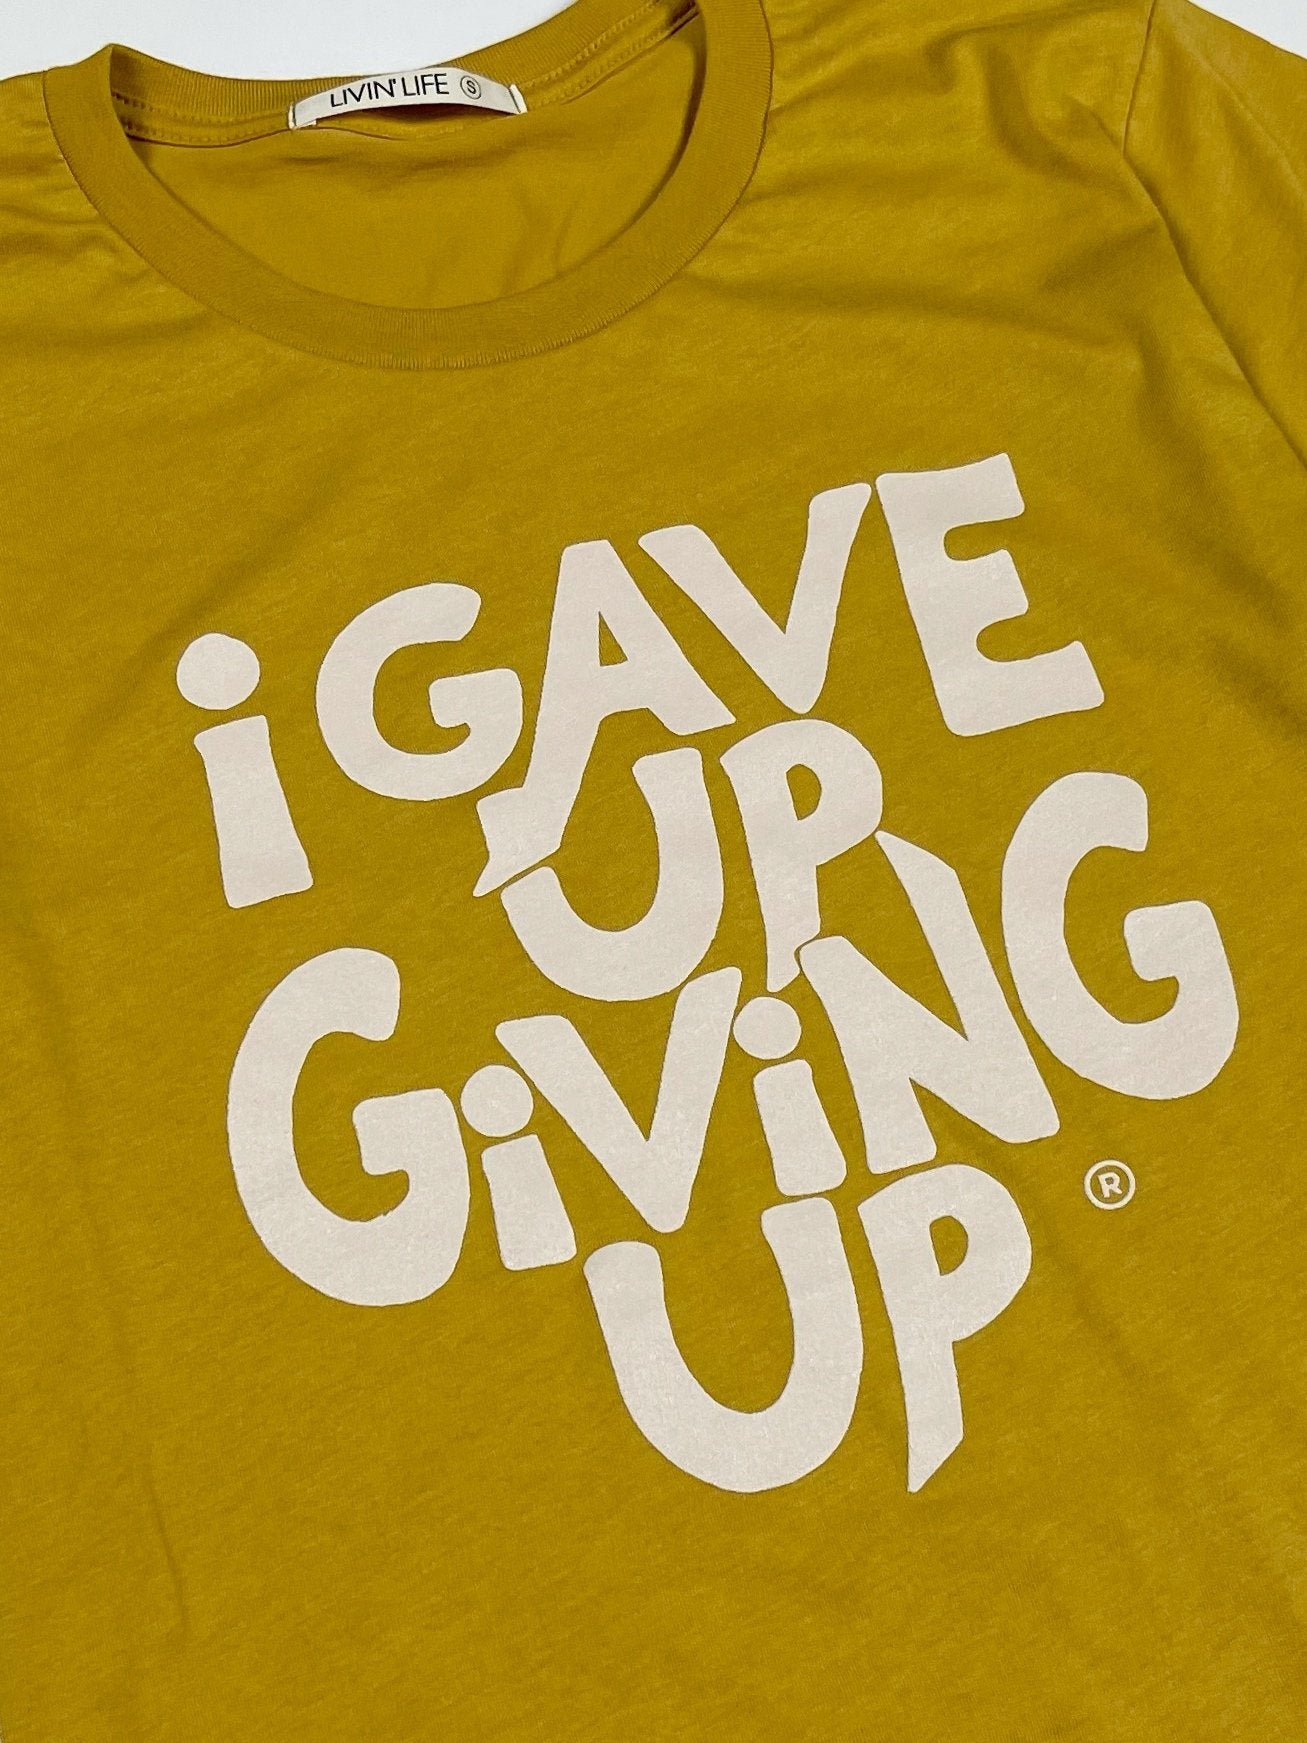 I_Gave_Up_Giving_Up_Tee_Tshirt_Mustard_Bone_2